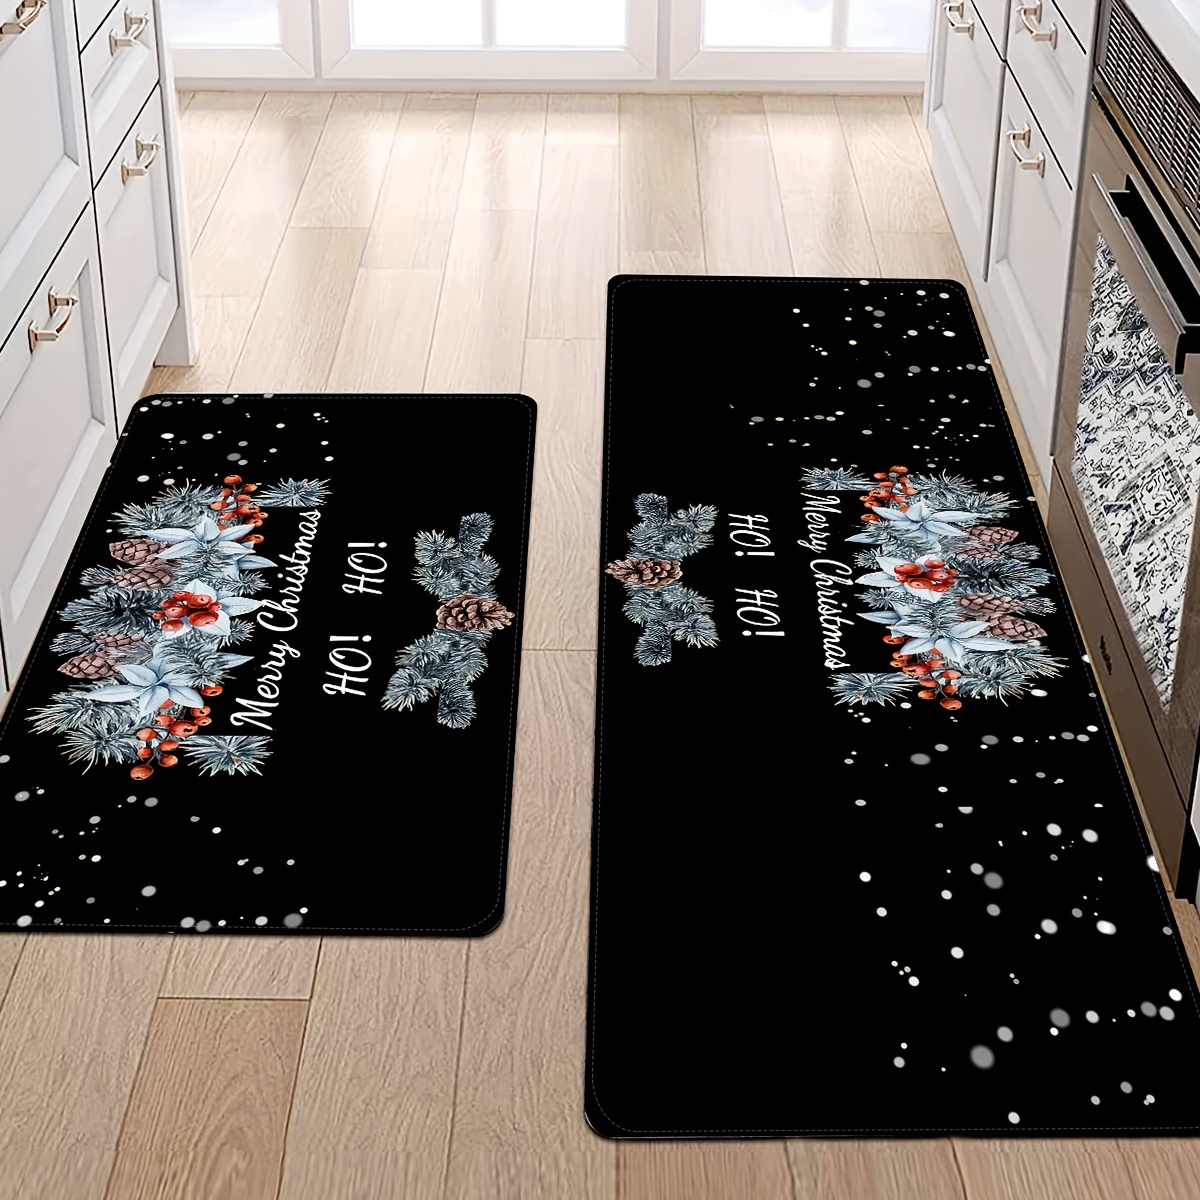  Christmas 2Pcs Kitchen Rugs, Anti Fatigue Kitchen Mat Non Slip  Rug Runner Comfort Standing Floor Mats Kitchen Carpet Set for Sink, Laundry  - Christmas Snowman White Snowflake : Home & Kitchen